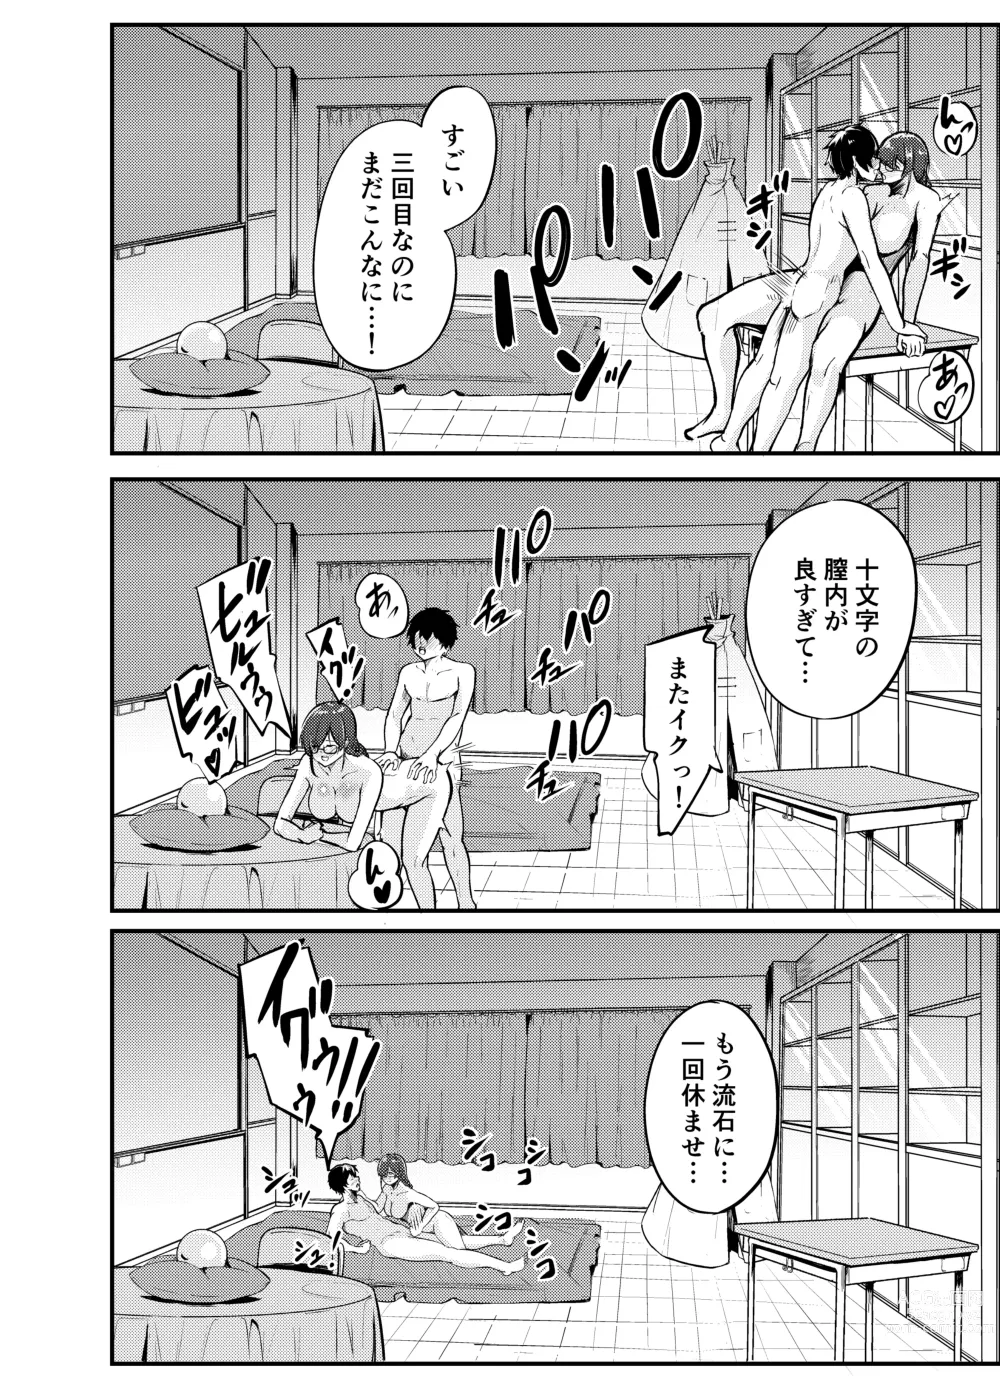 Page 21 of doujinshi Kowaku Juumonji Kaho no Baai